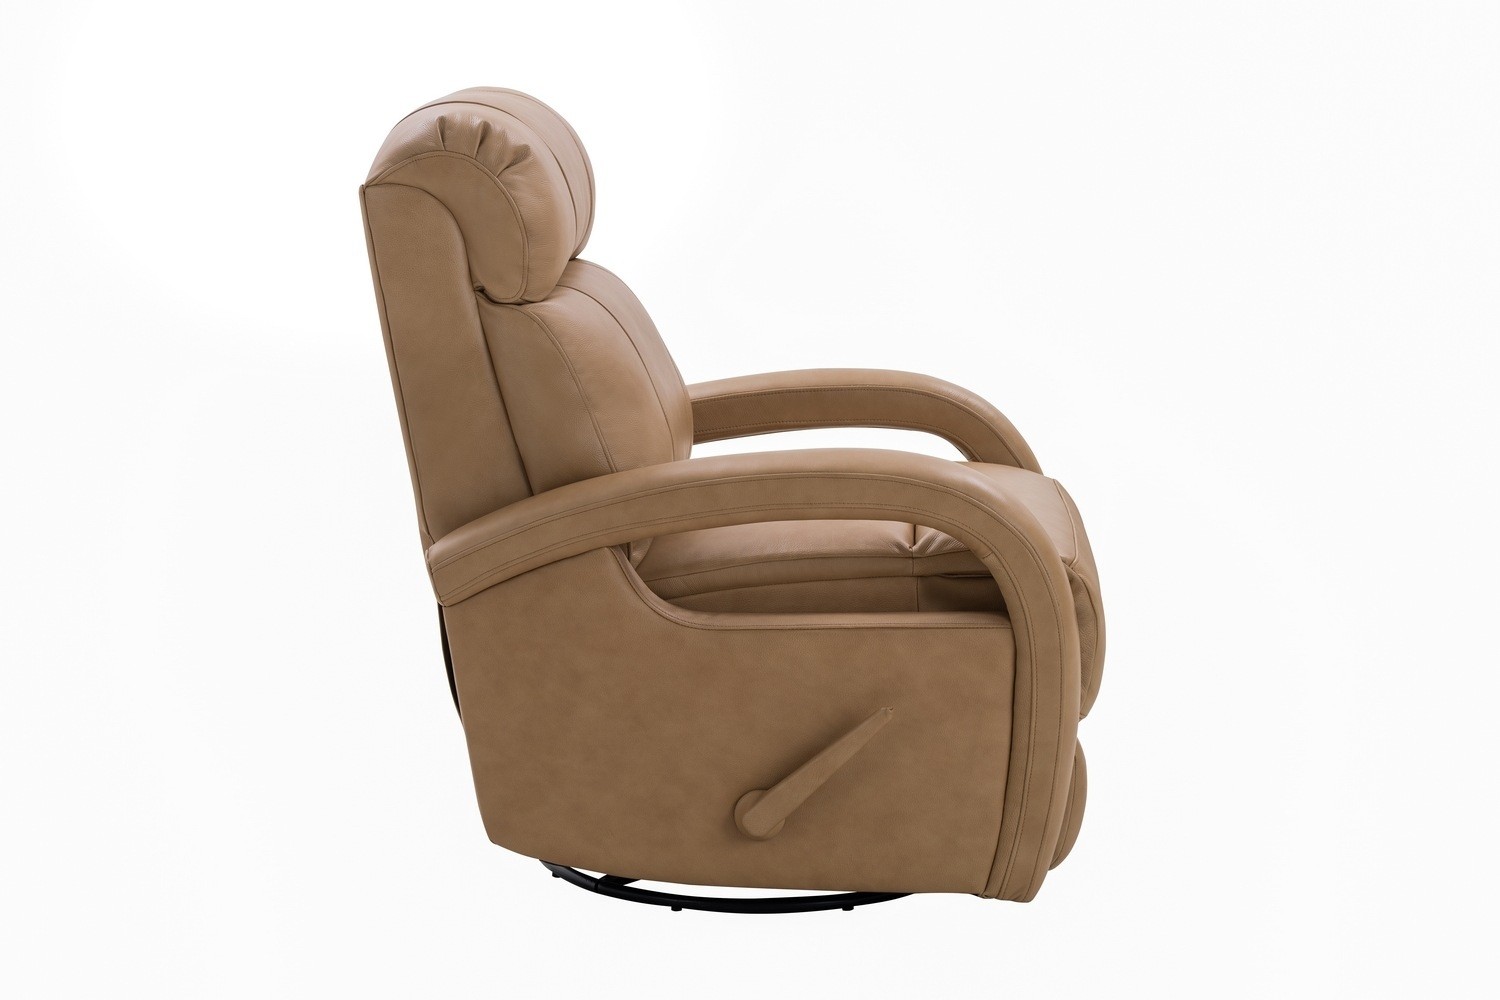 Barcalounger Harvey Swivel Glider Recliner Chair - Prestin Tuscan Sun/All Leather